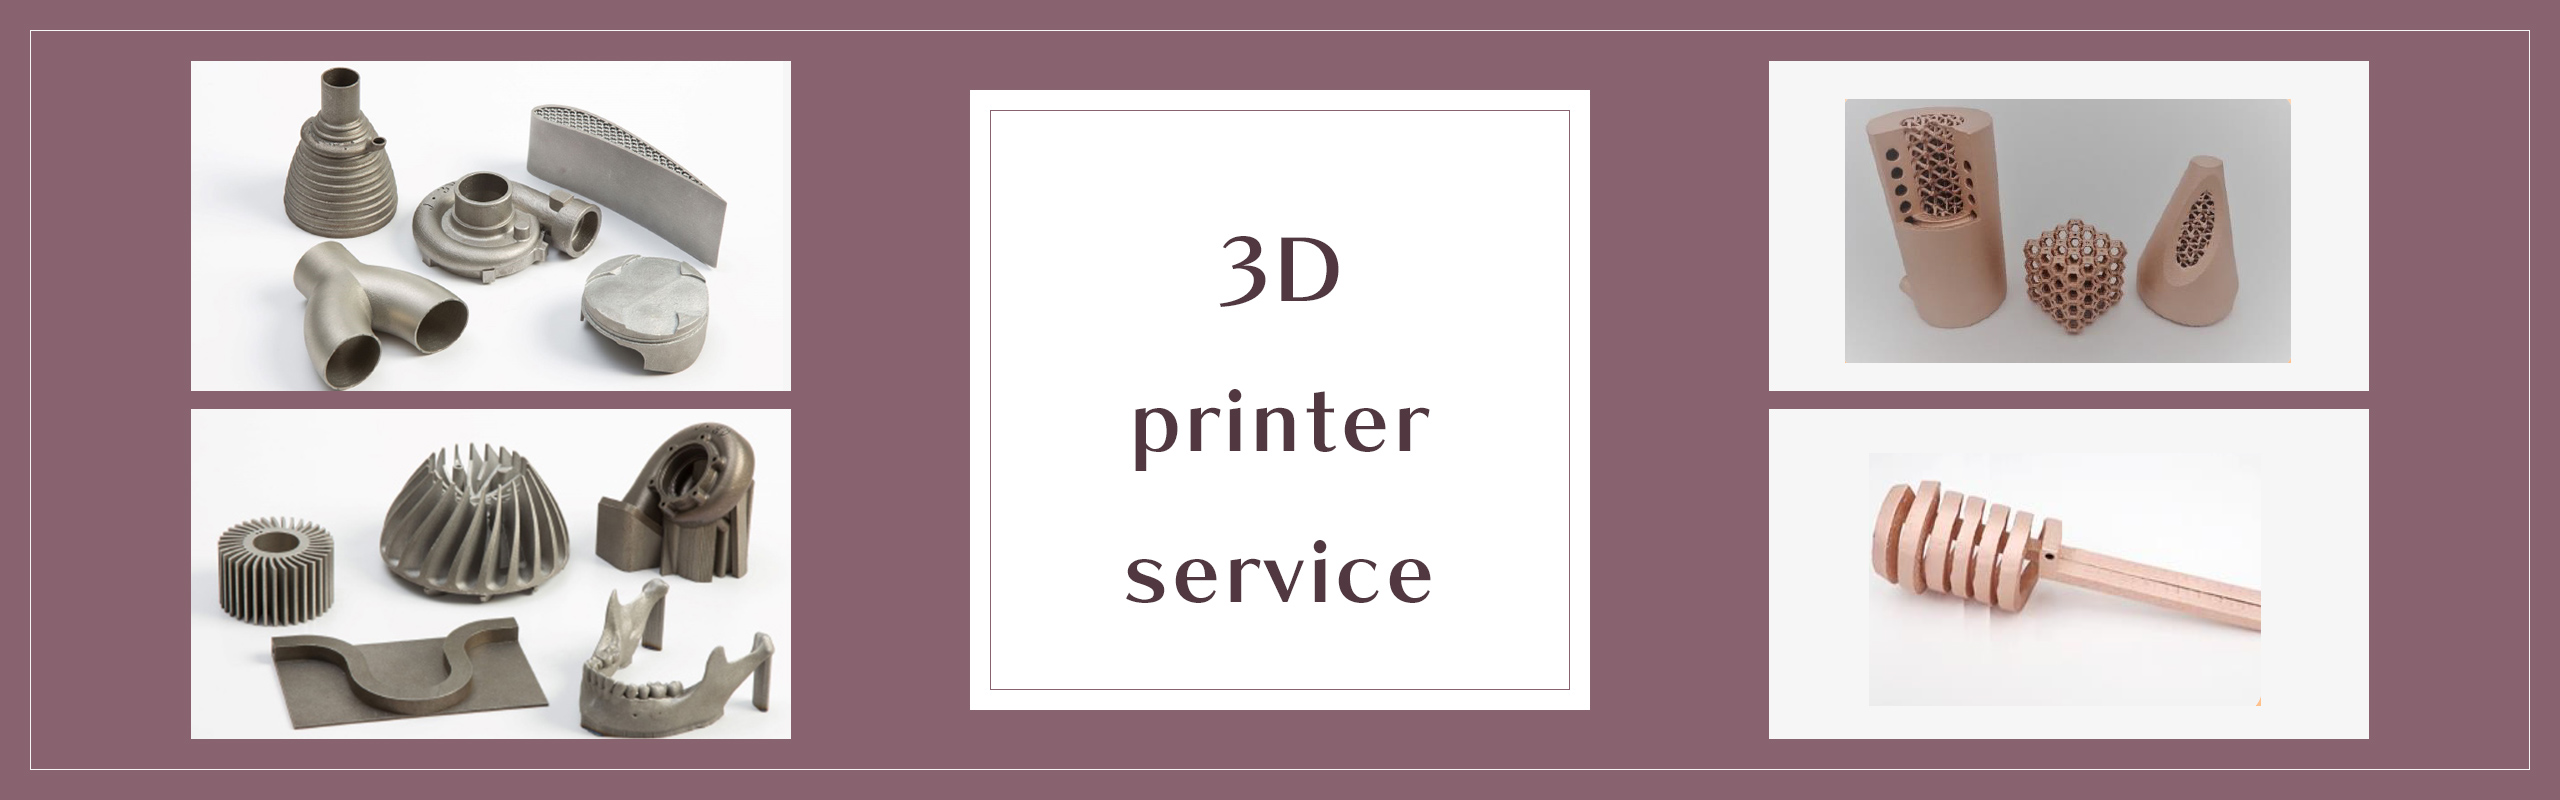 3D printer service